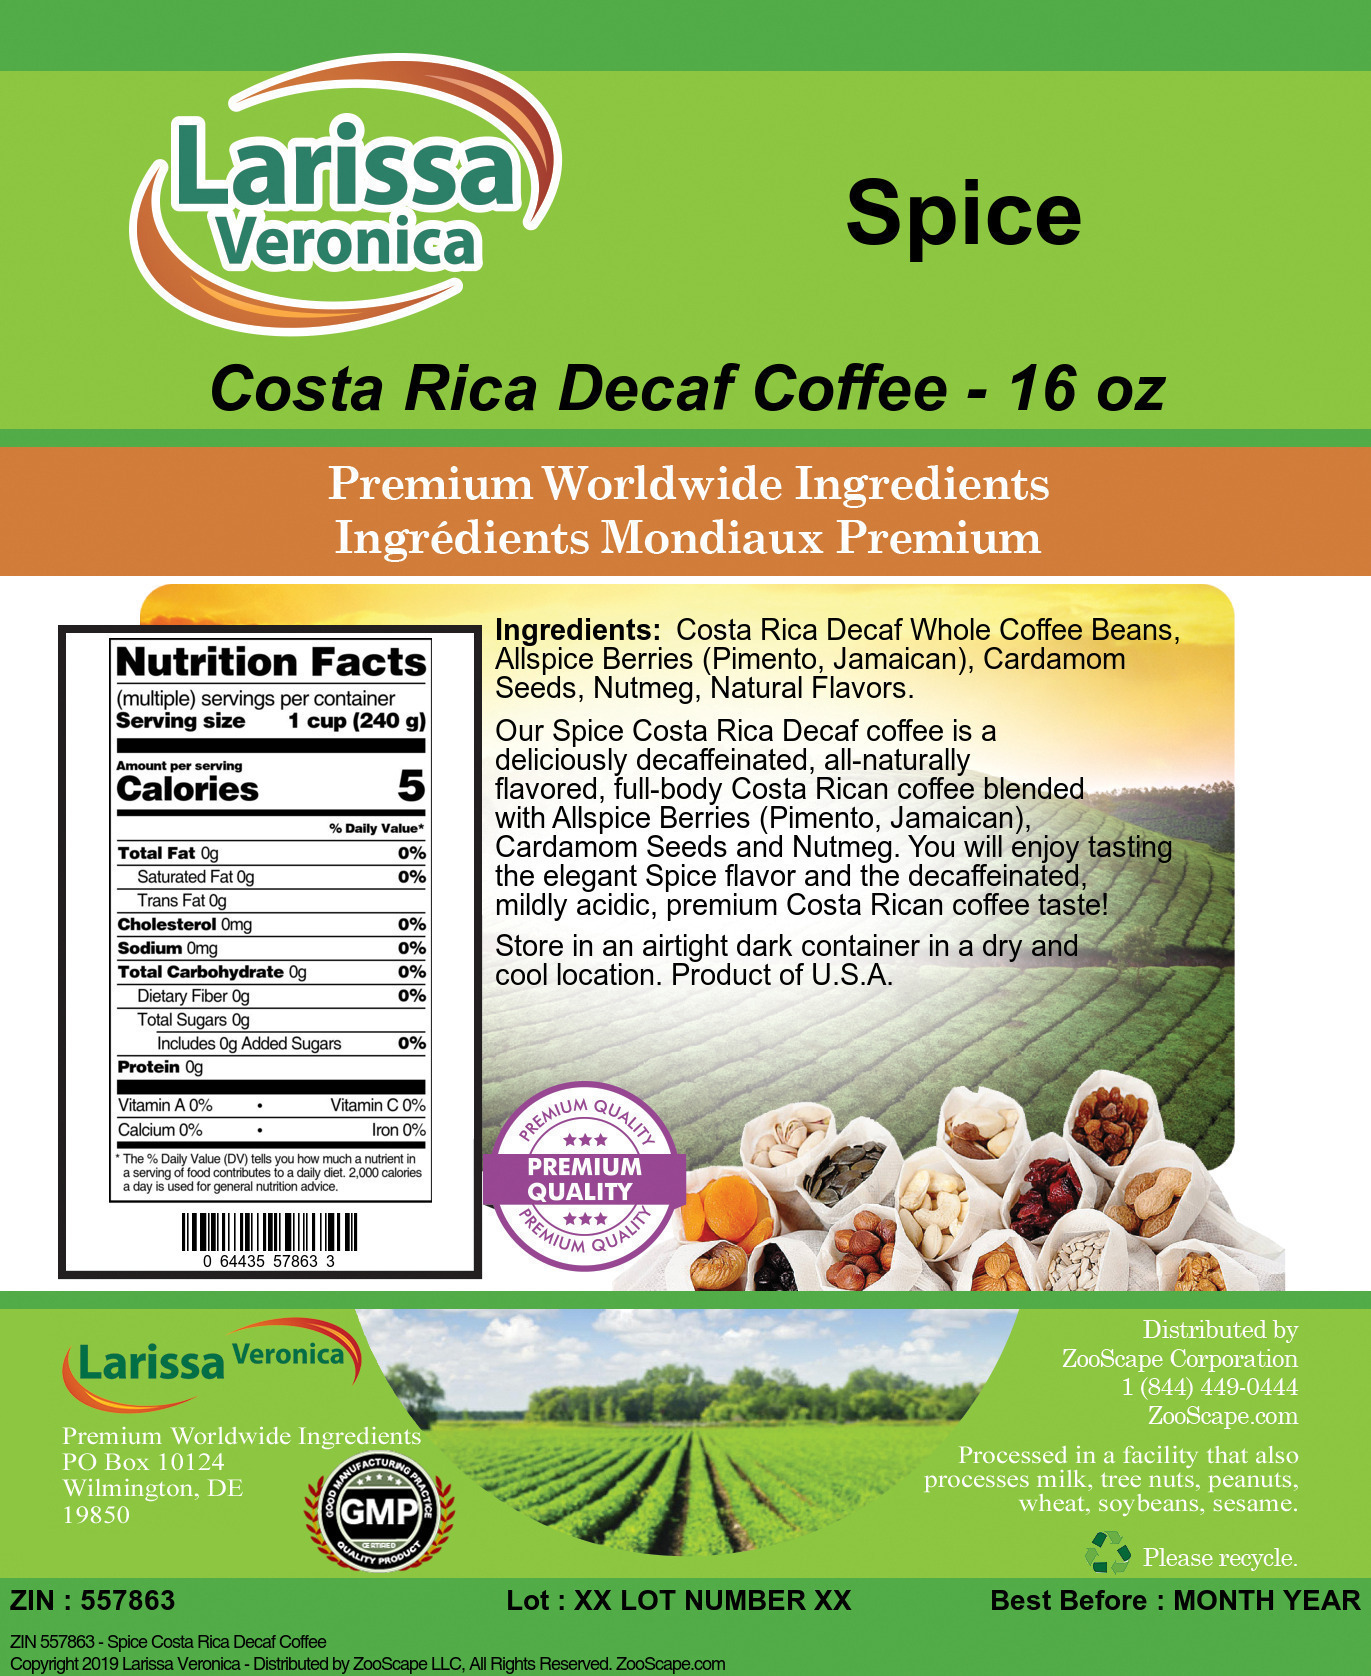 Spice Costa Rica Decaf Coffee - Label